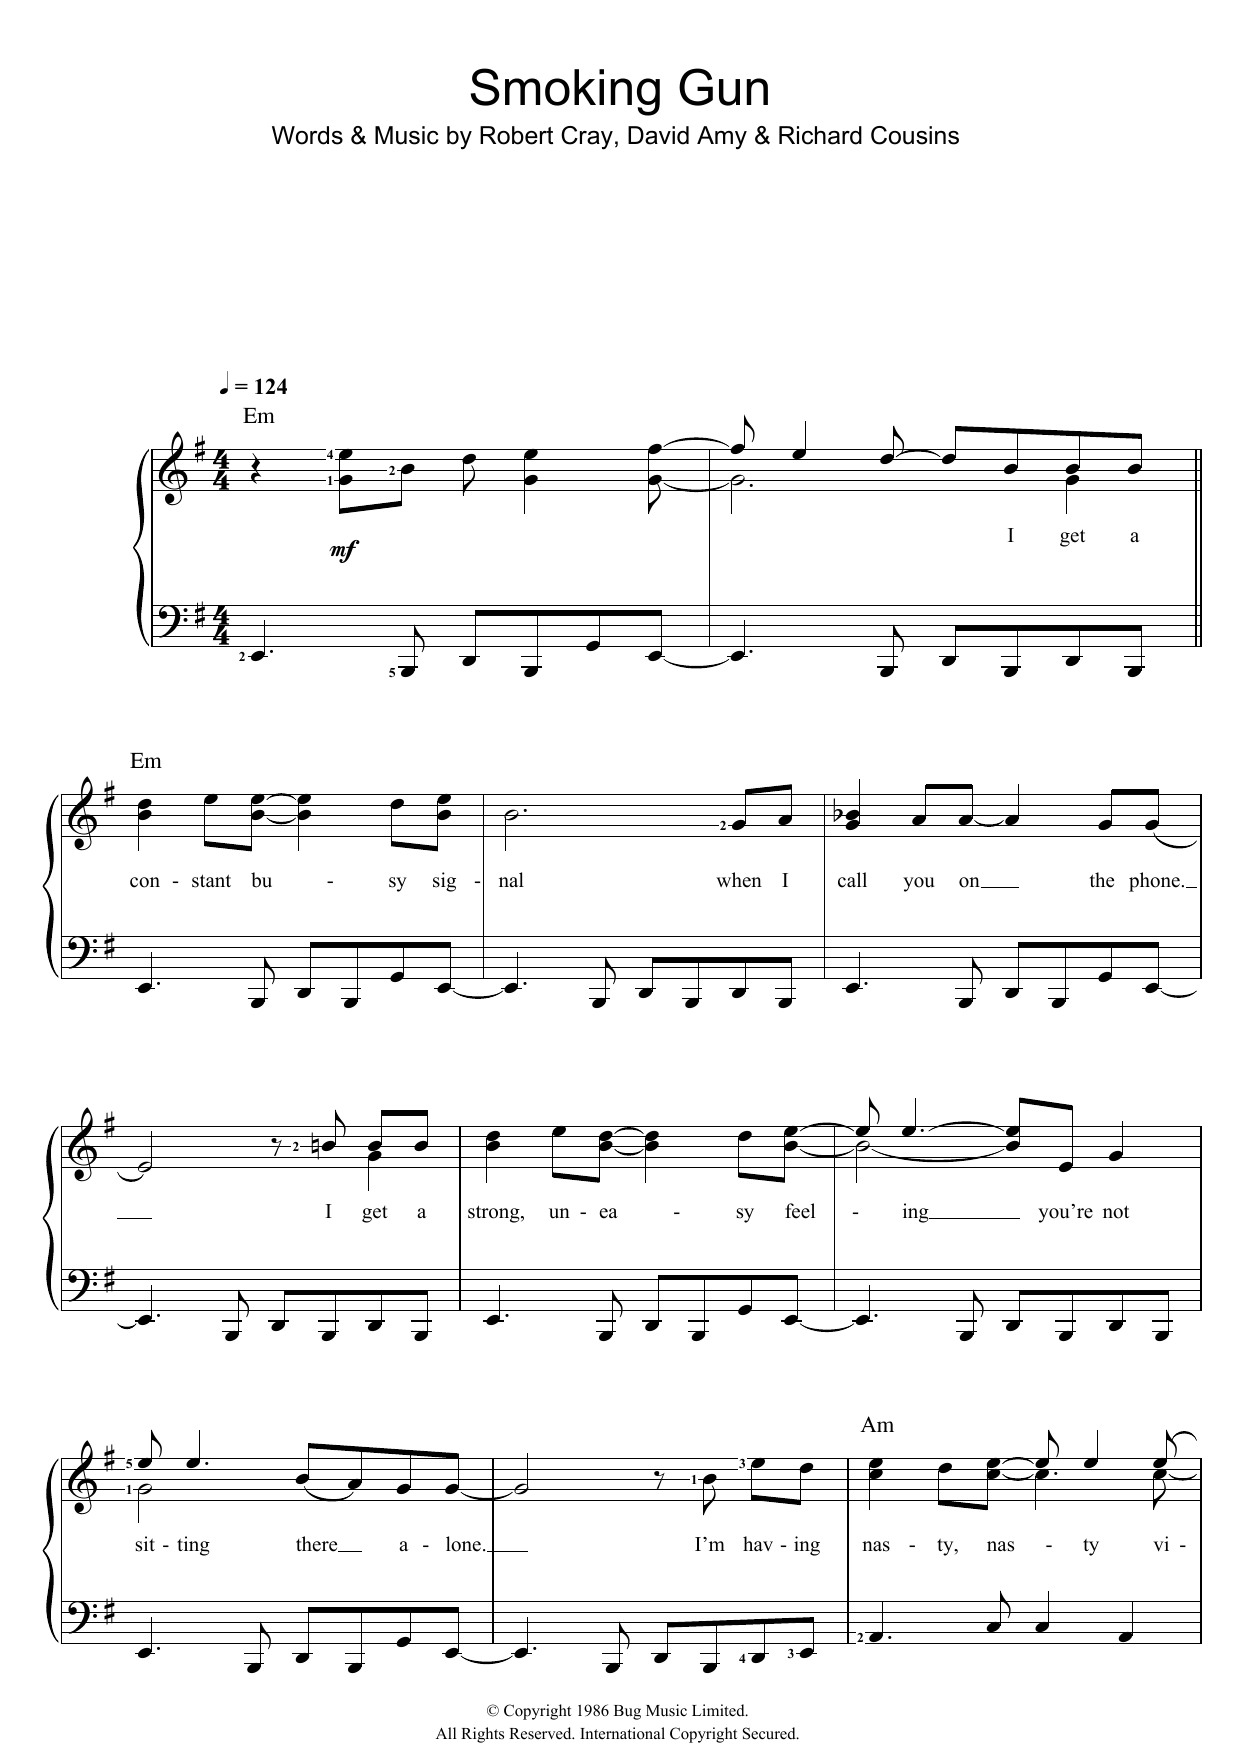 Robert Cray Smoking Gun Sheet Music Notes & Chords for Piano & Vocal - Download or Print PDF